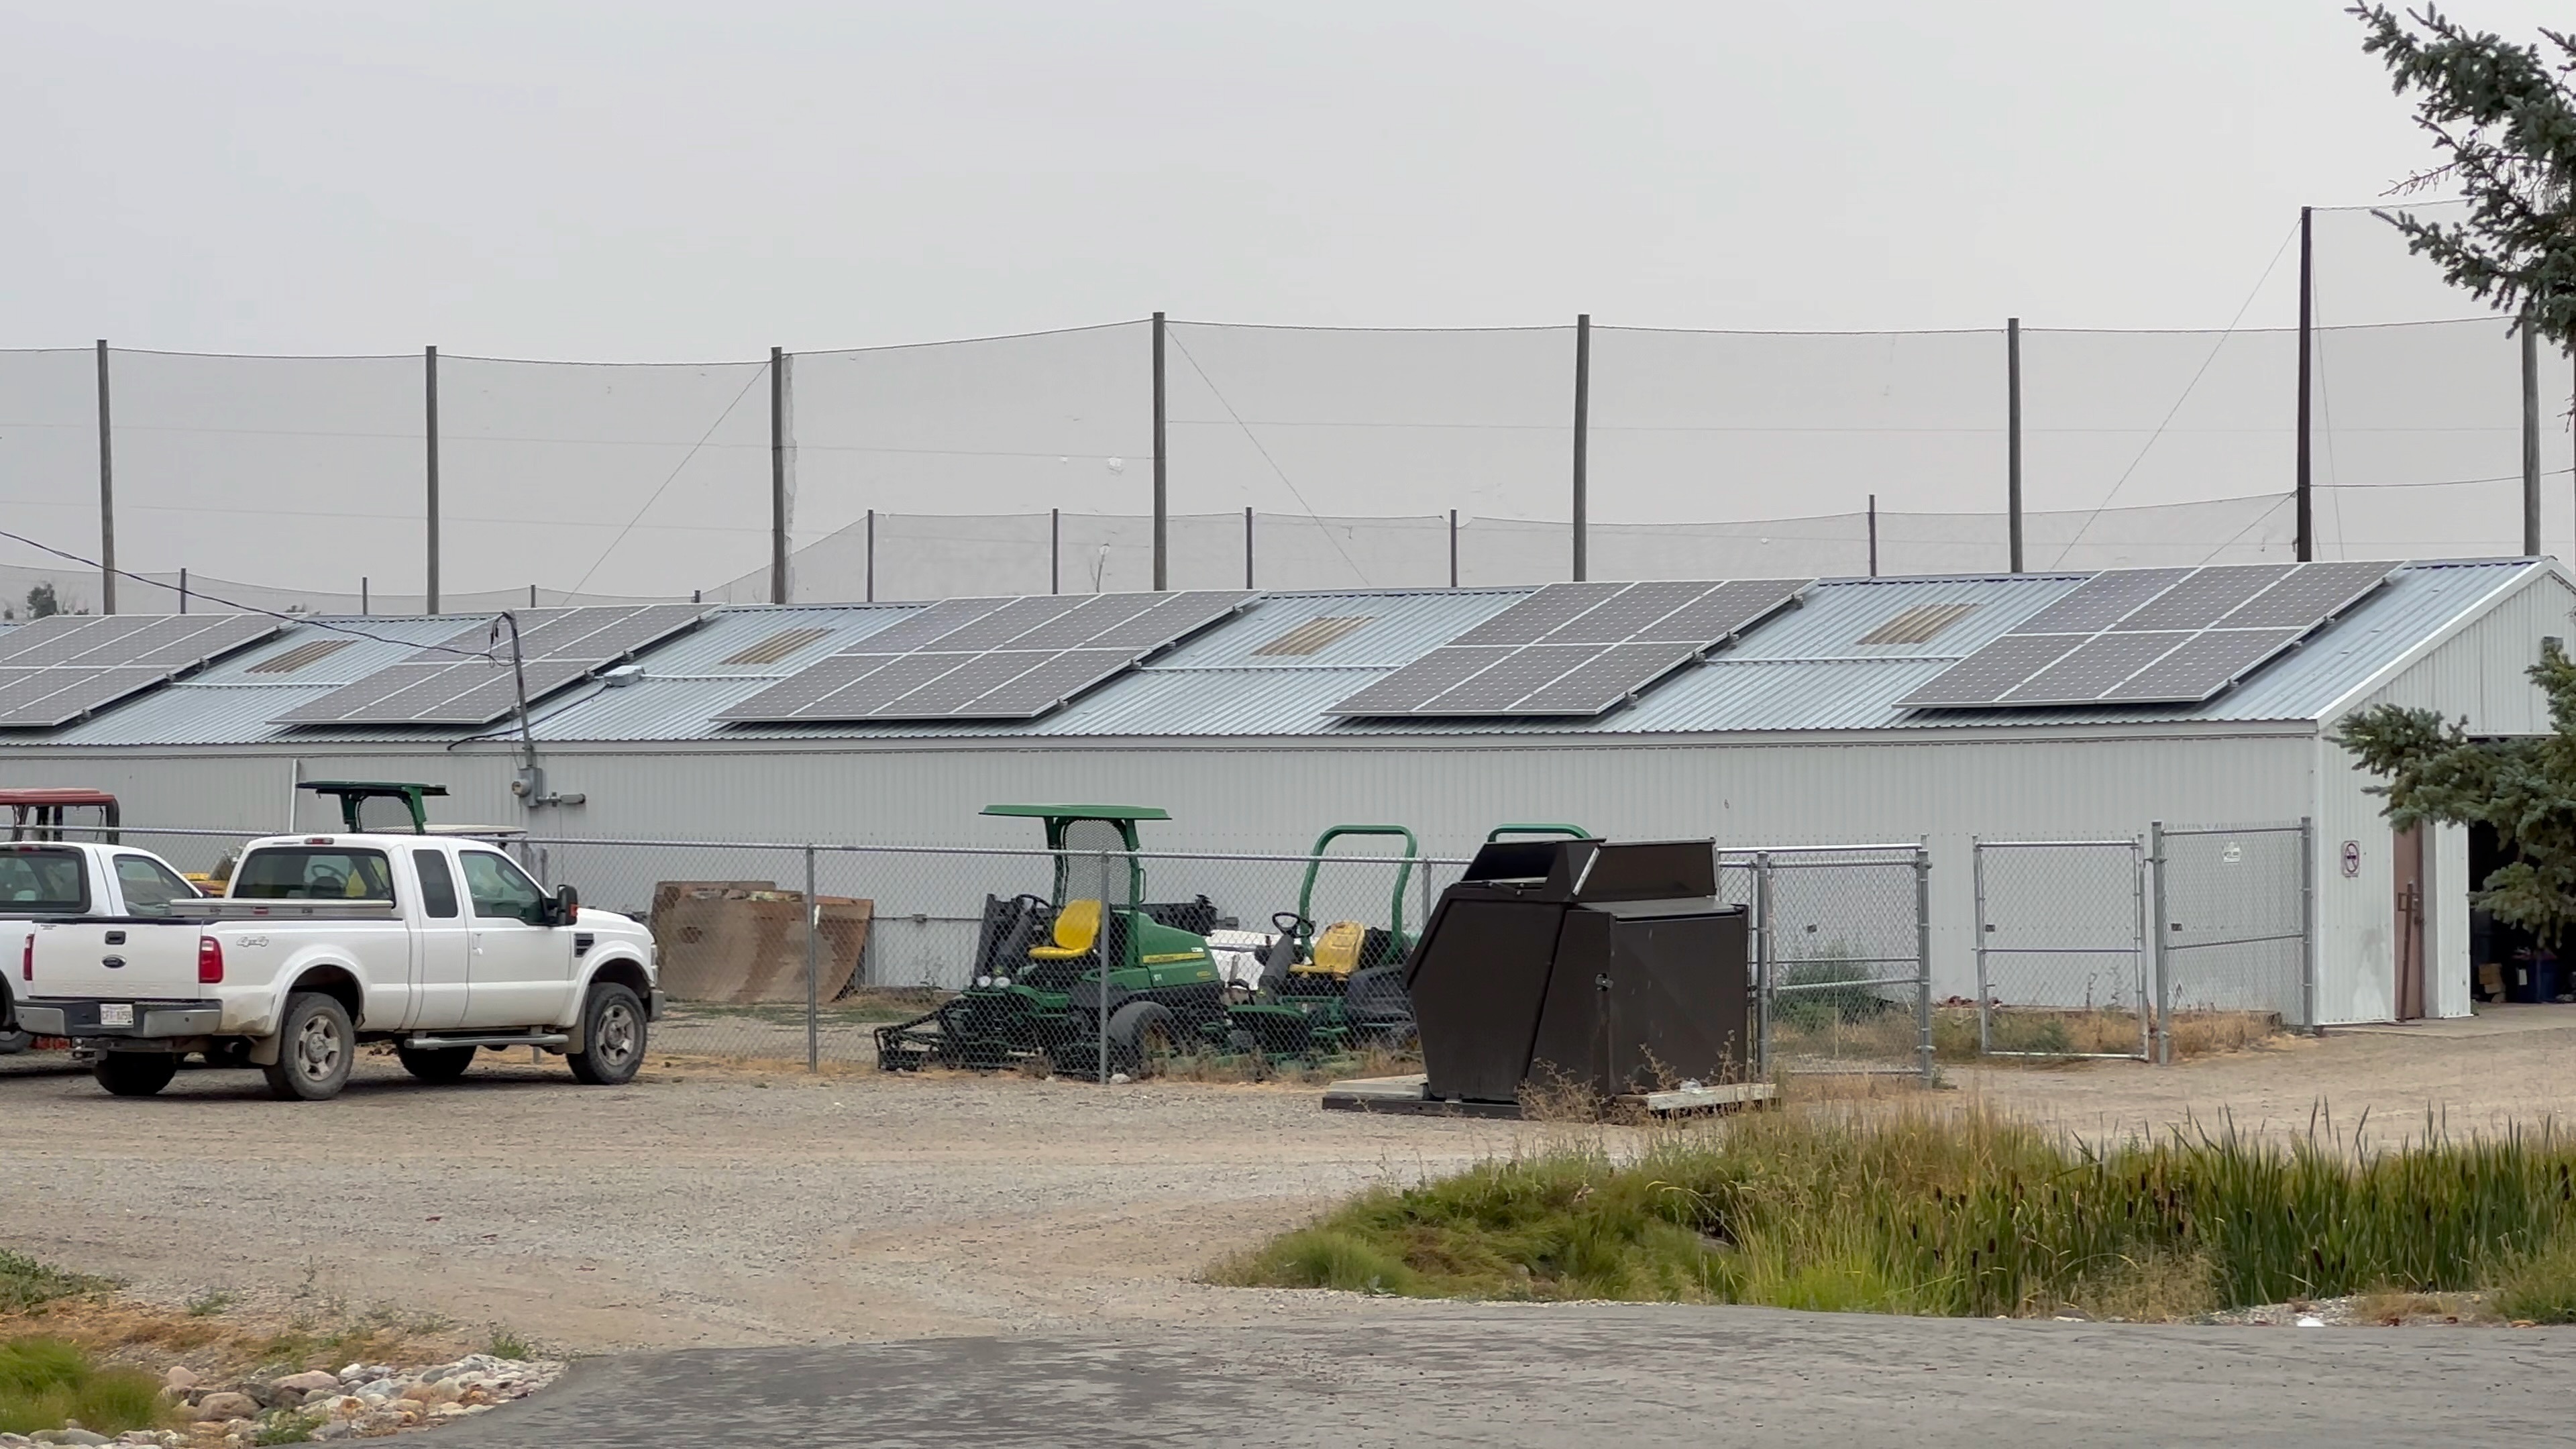 Solar on sheds at Golf Course Raymond Alberta